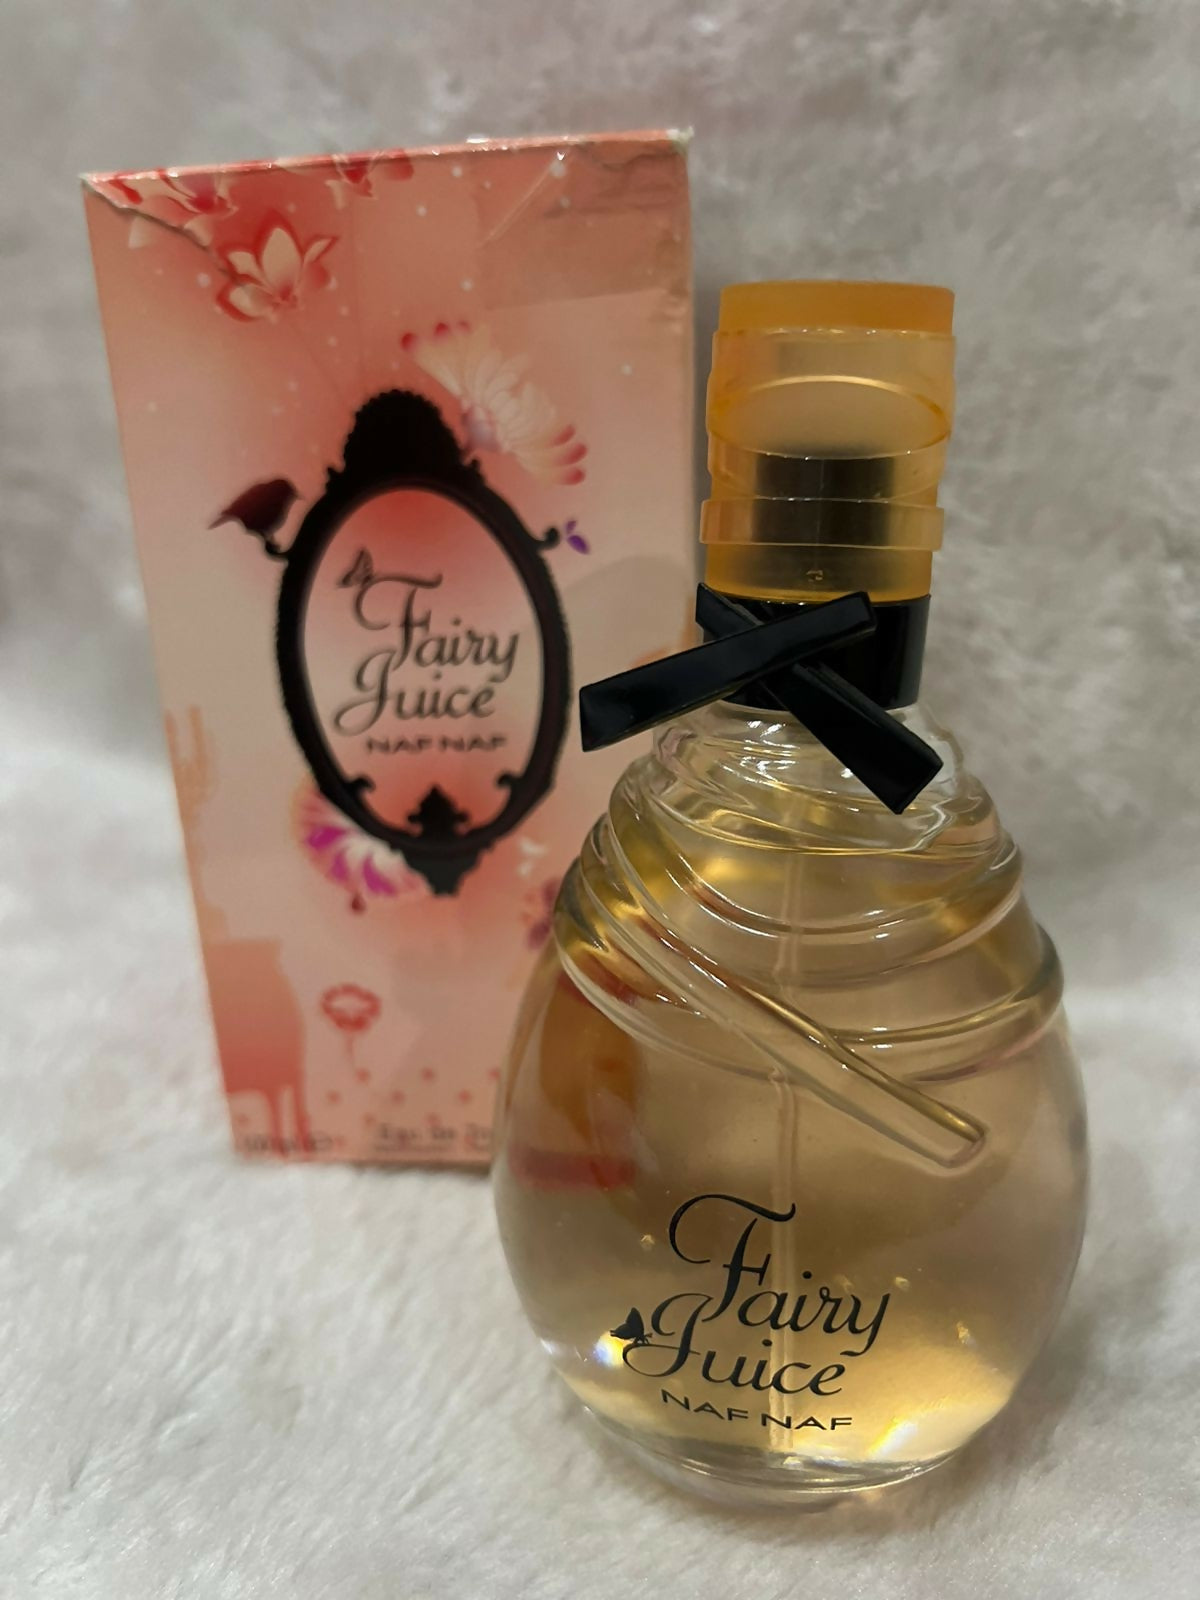 Fairy Juice Naf Naf Perfume 100ml